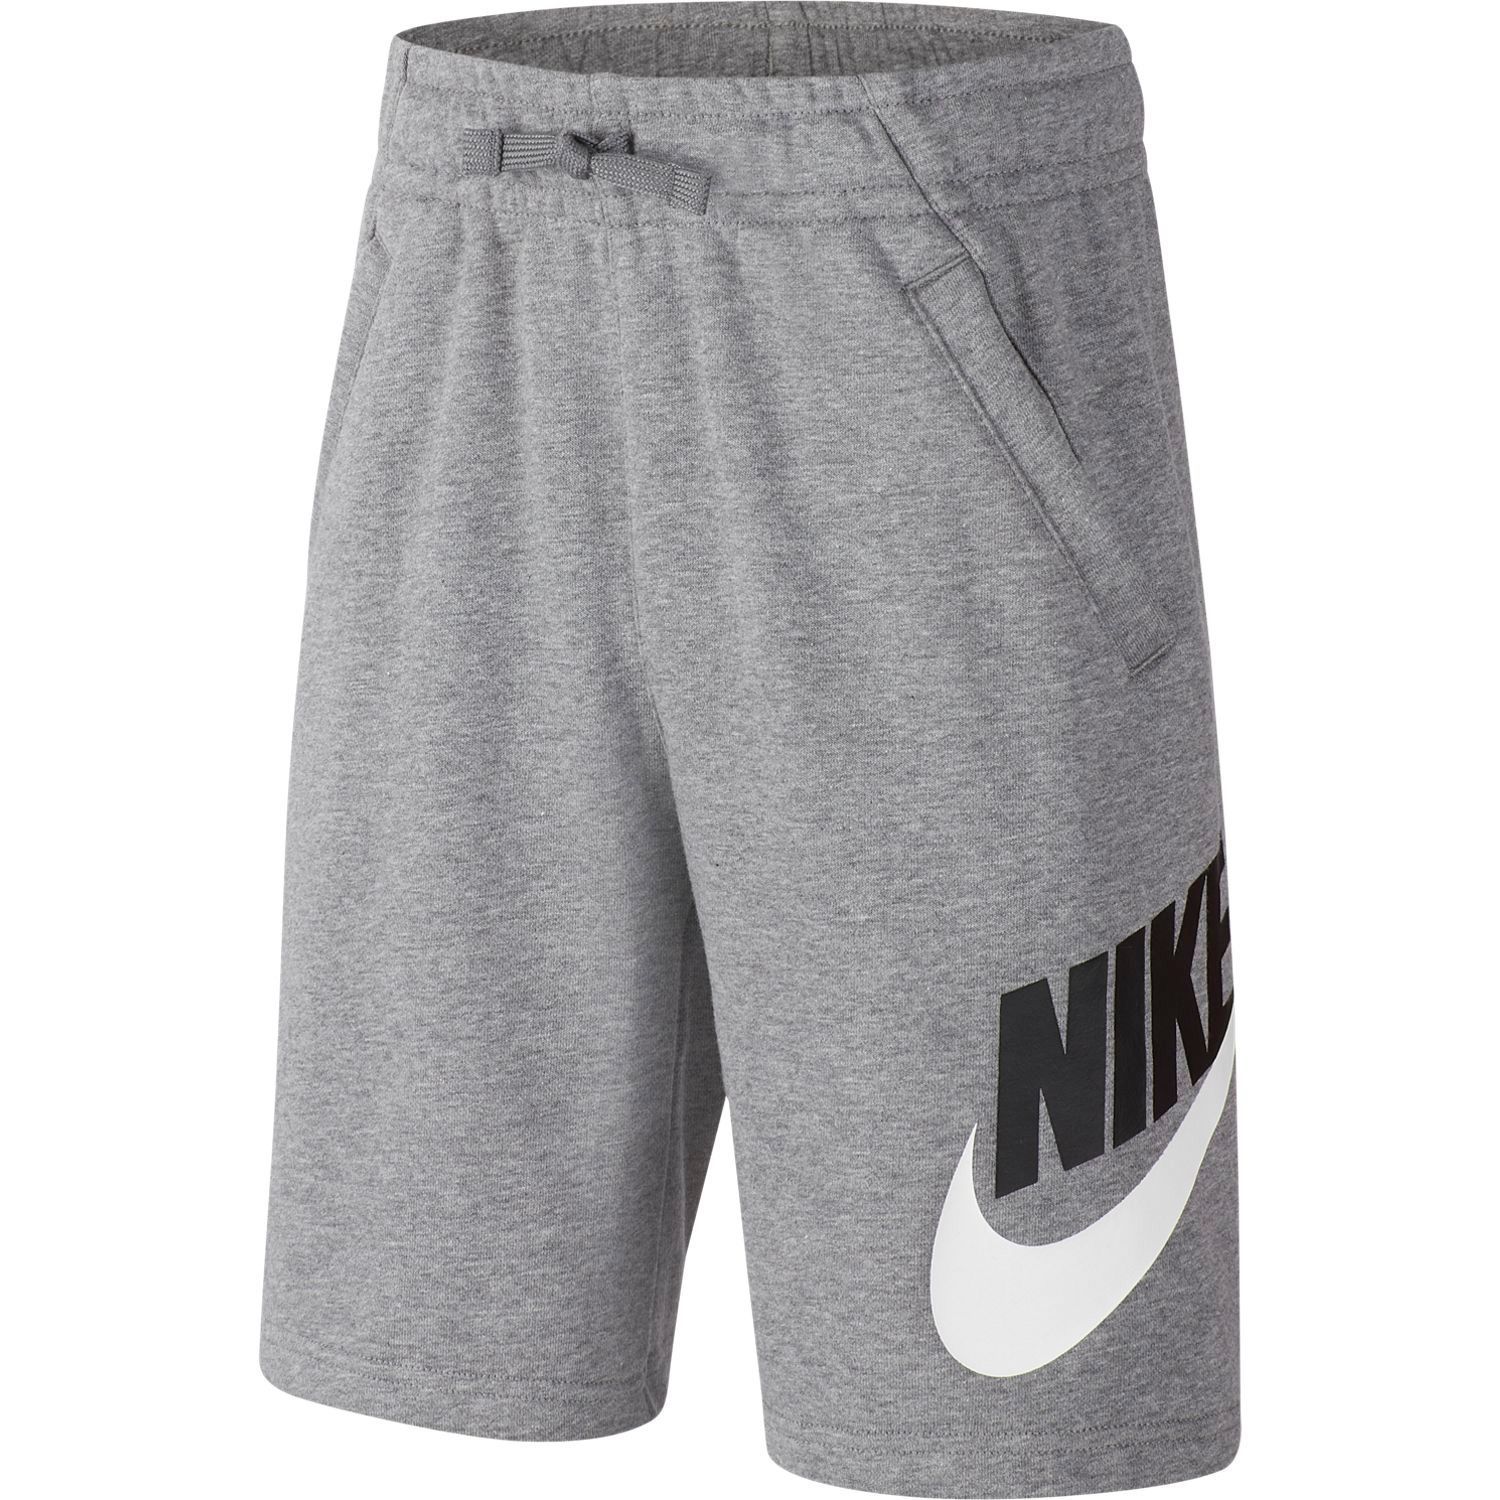 nike grey shorts fleece